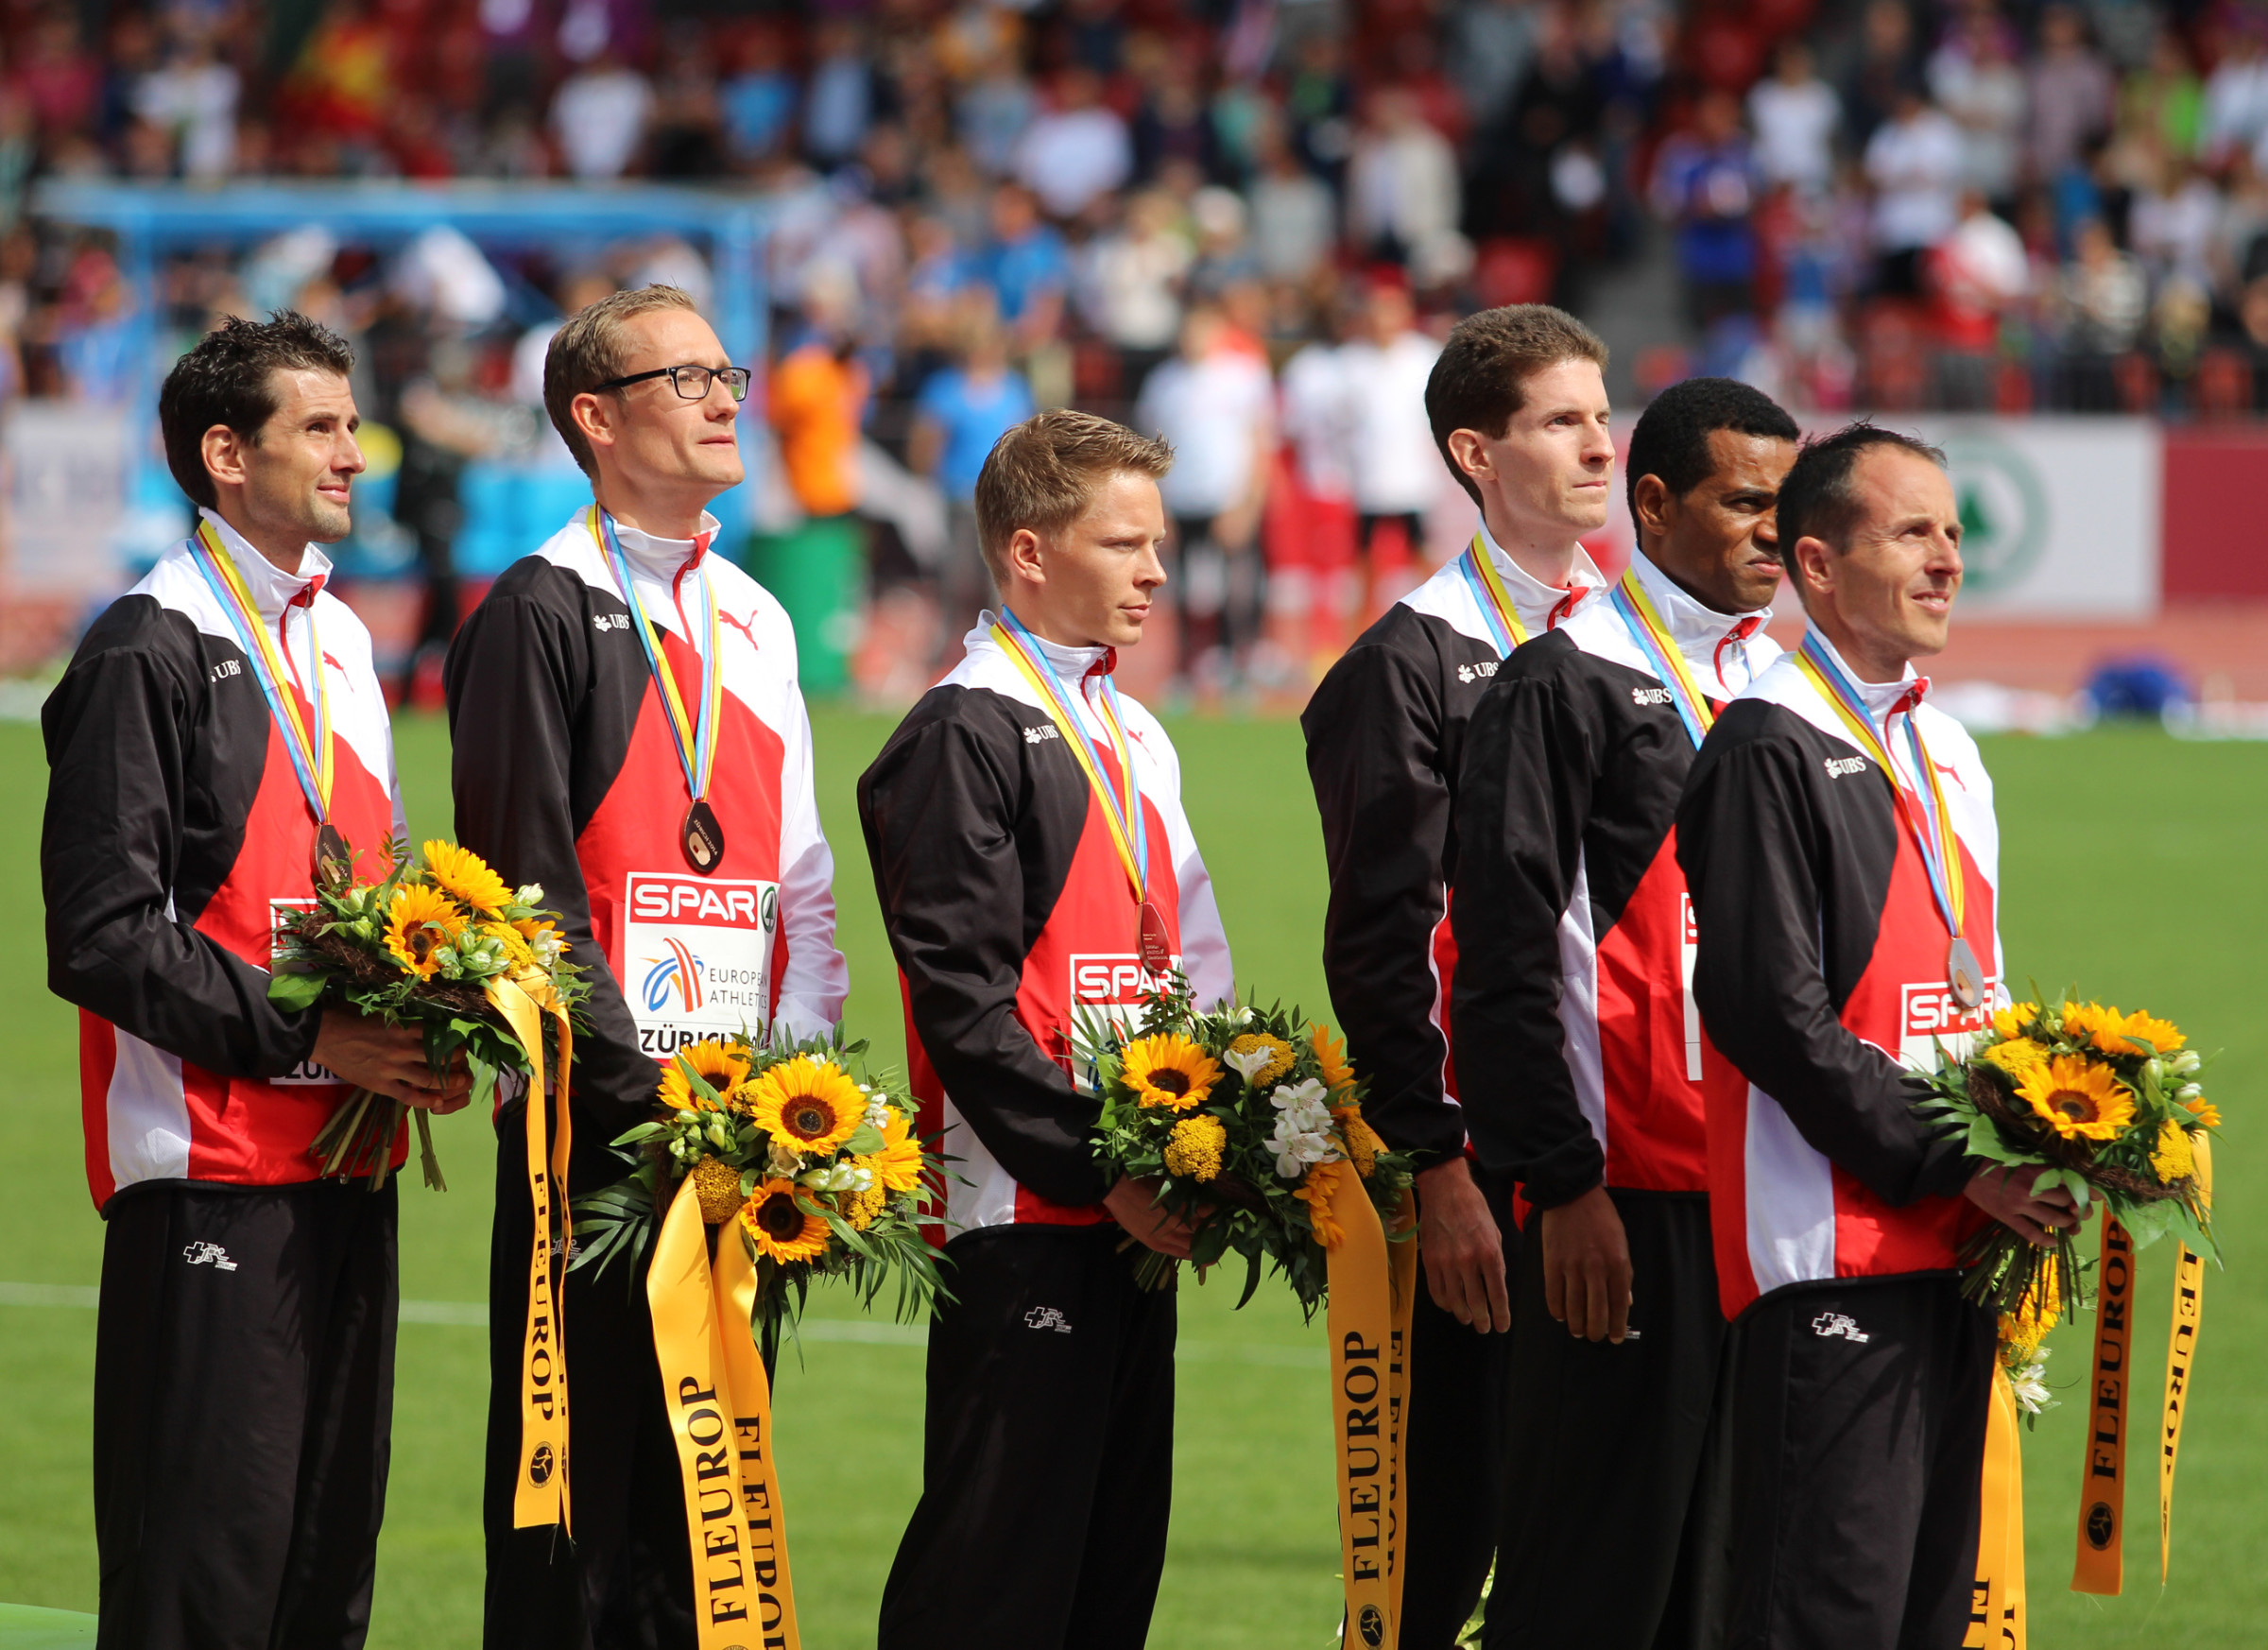 Leichtathletik-EM 2014, 17. August 2014 (Bild: Hugo Rey)